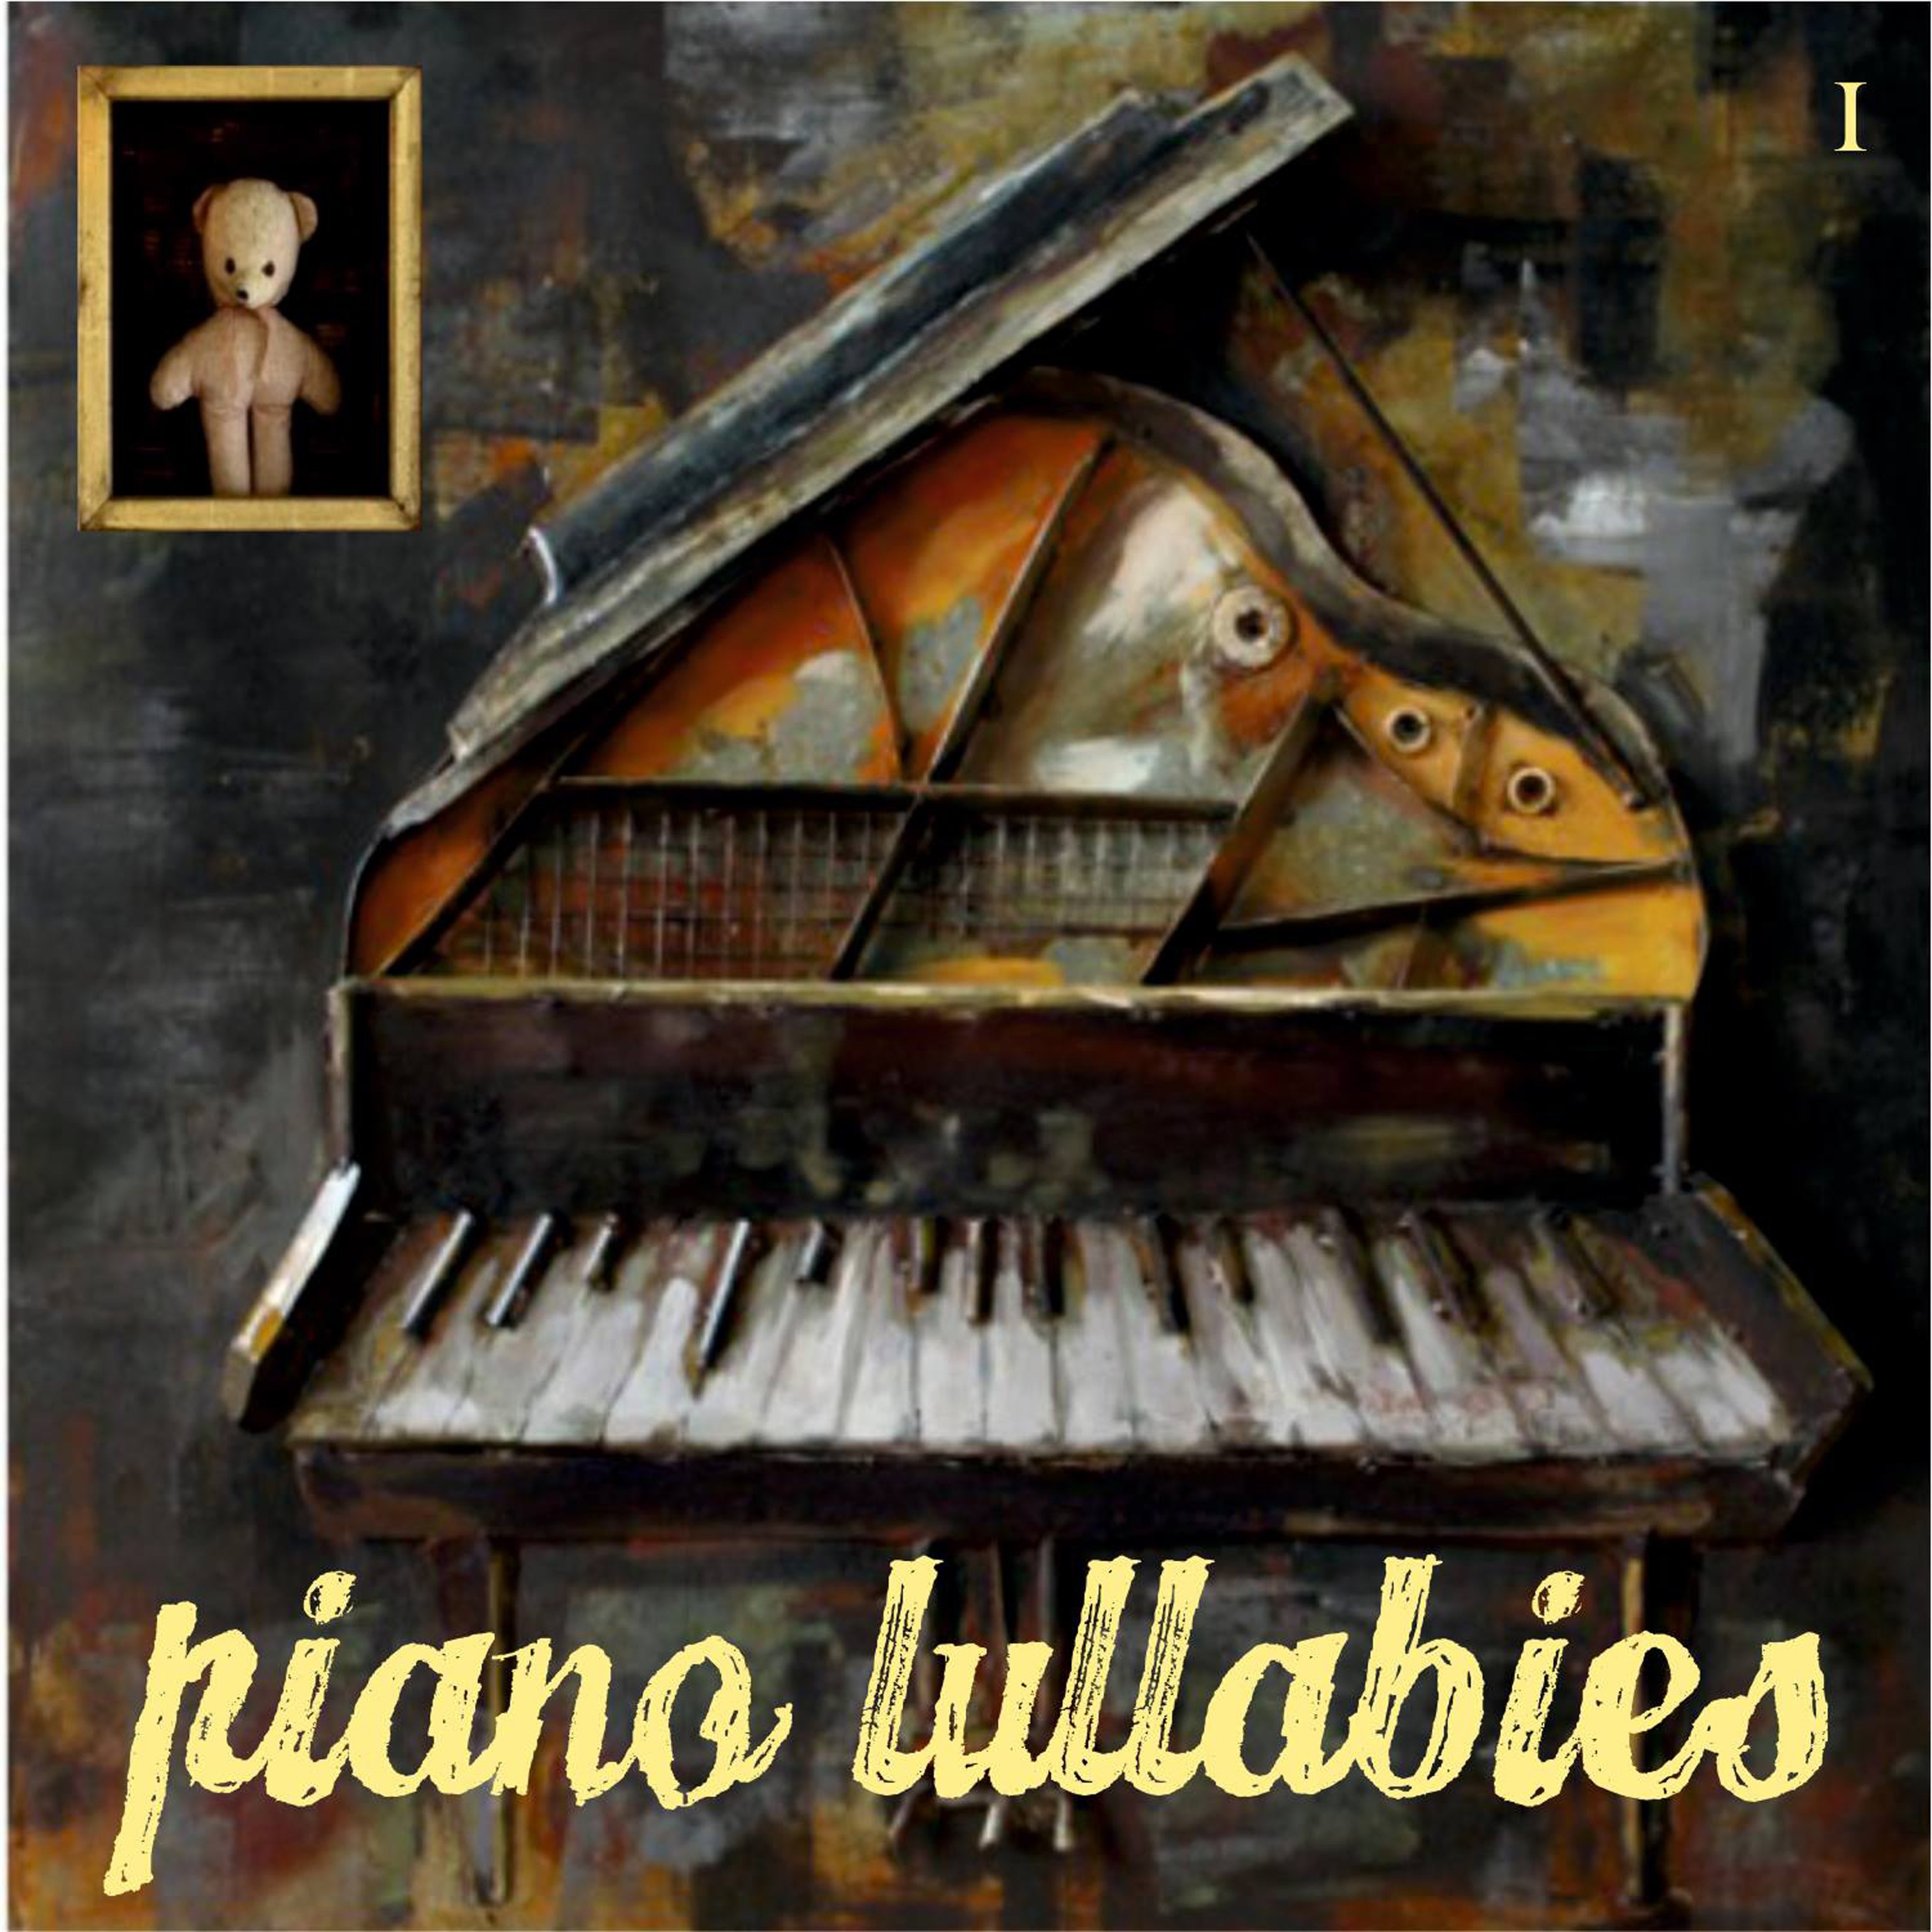 Piano Lullabies, Vol. 1